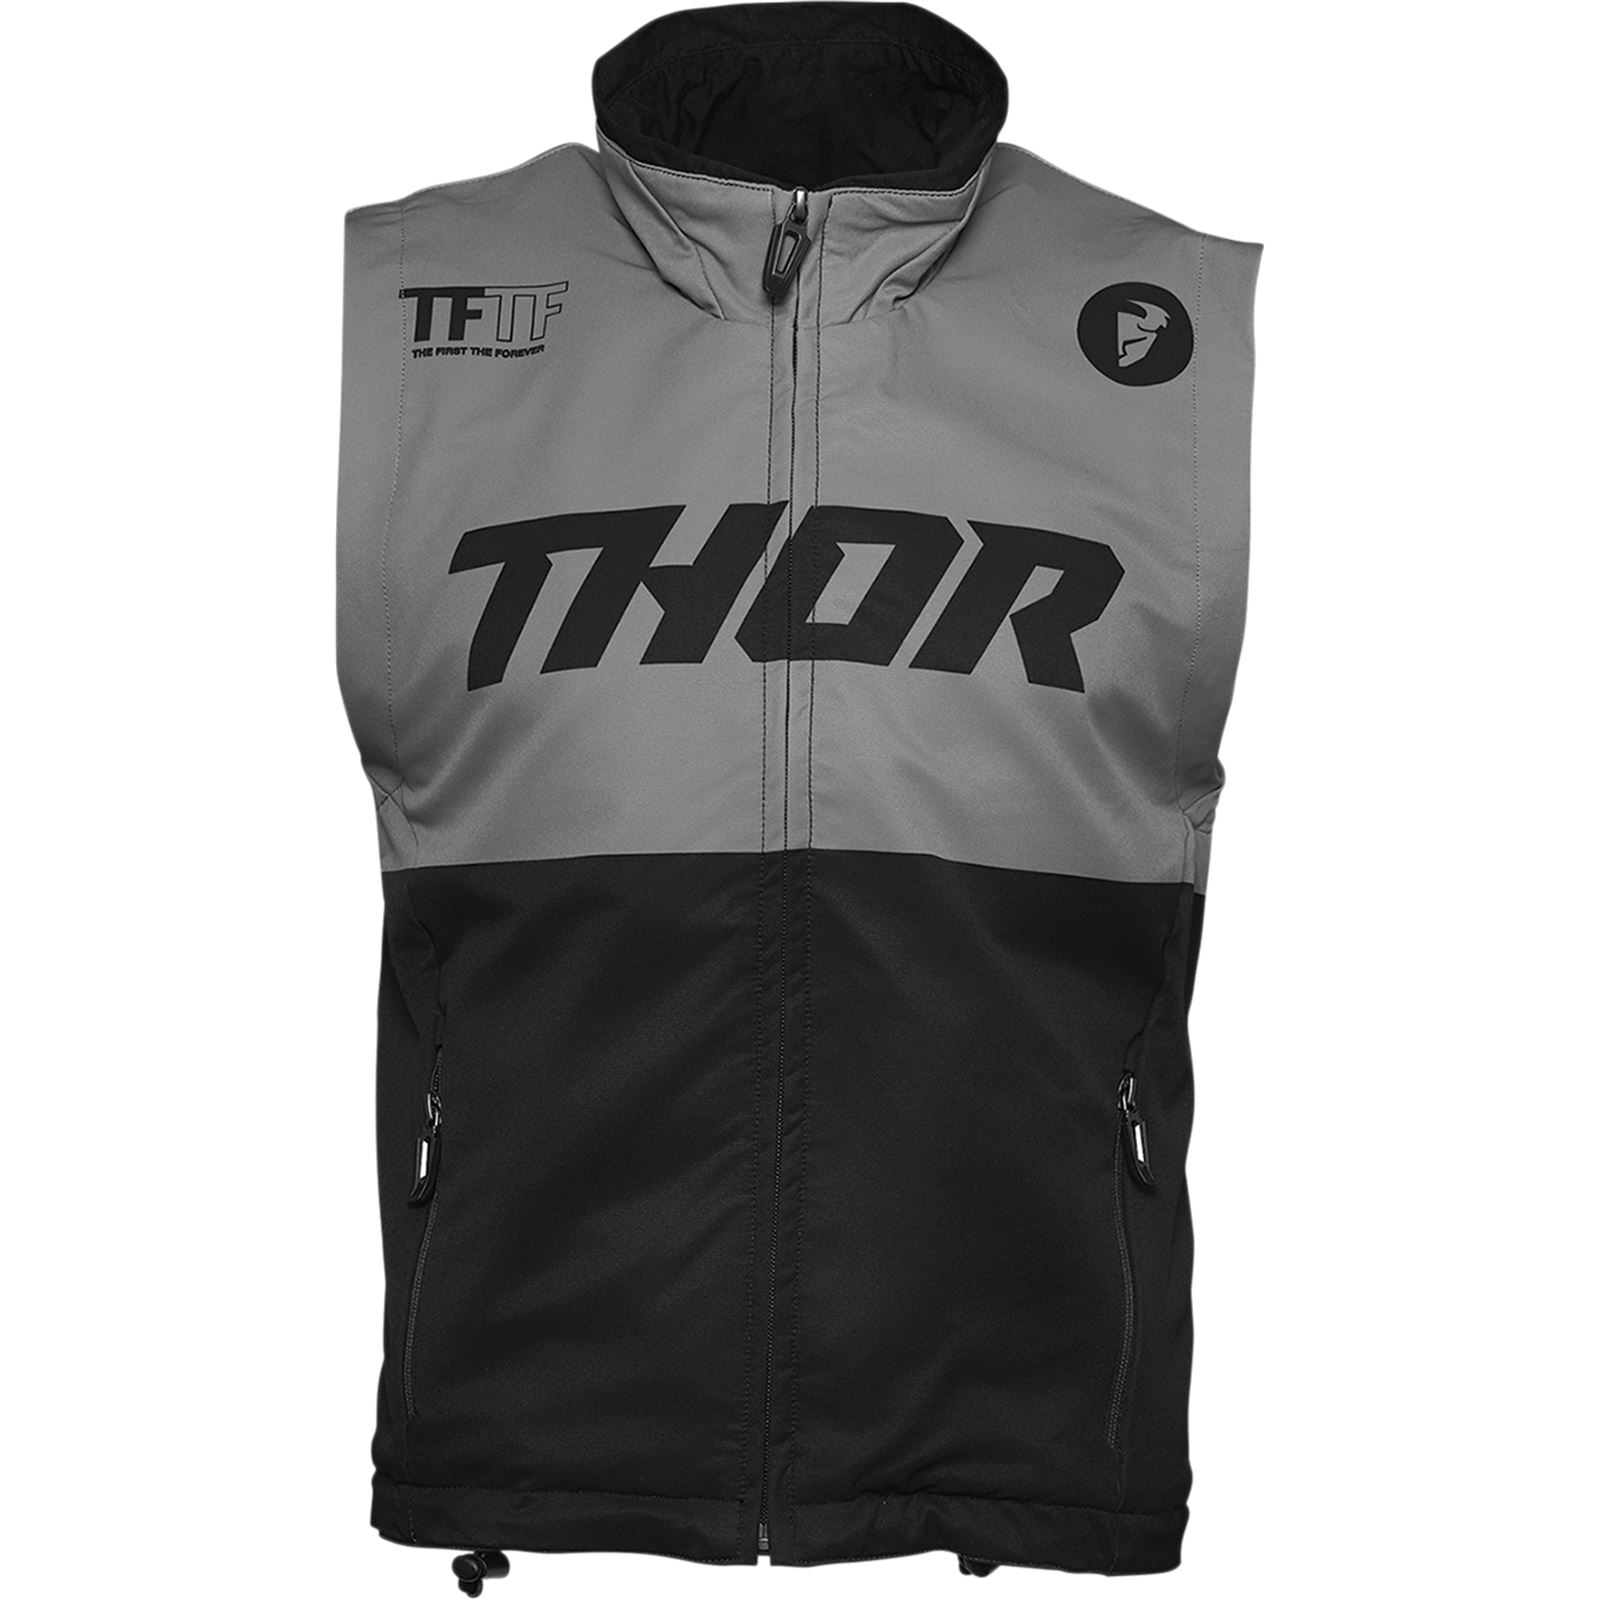 Thor Warmup Vest - Black/Charcoal - Medium